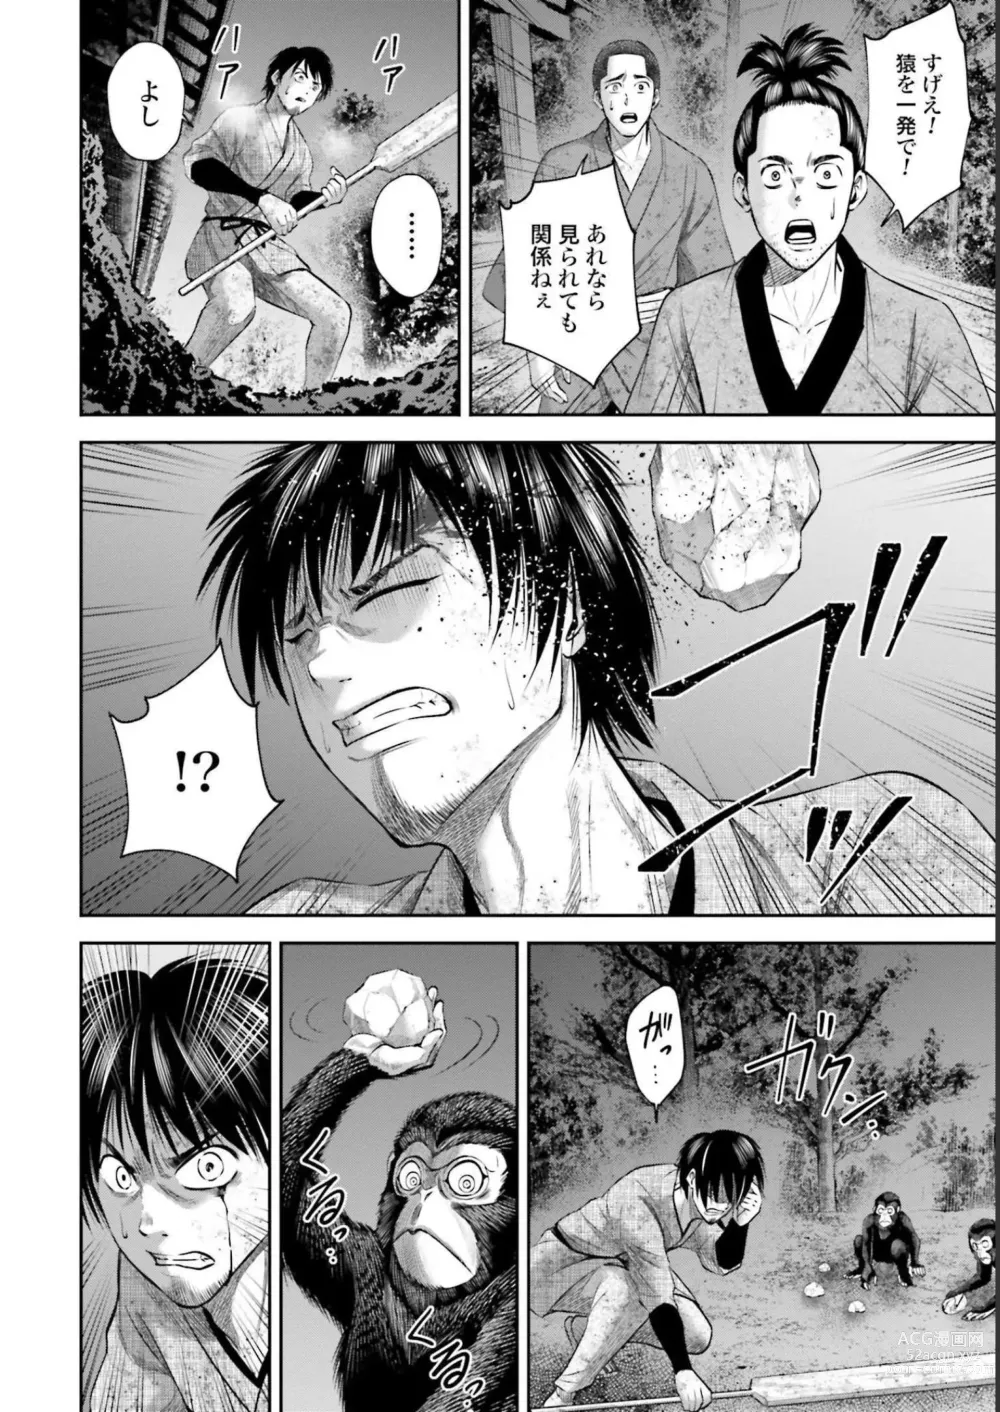 Page 10 of manga Sarumane Vol. 3